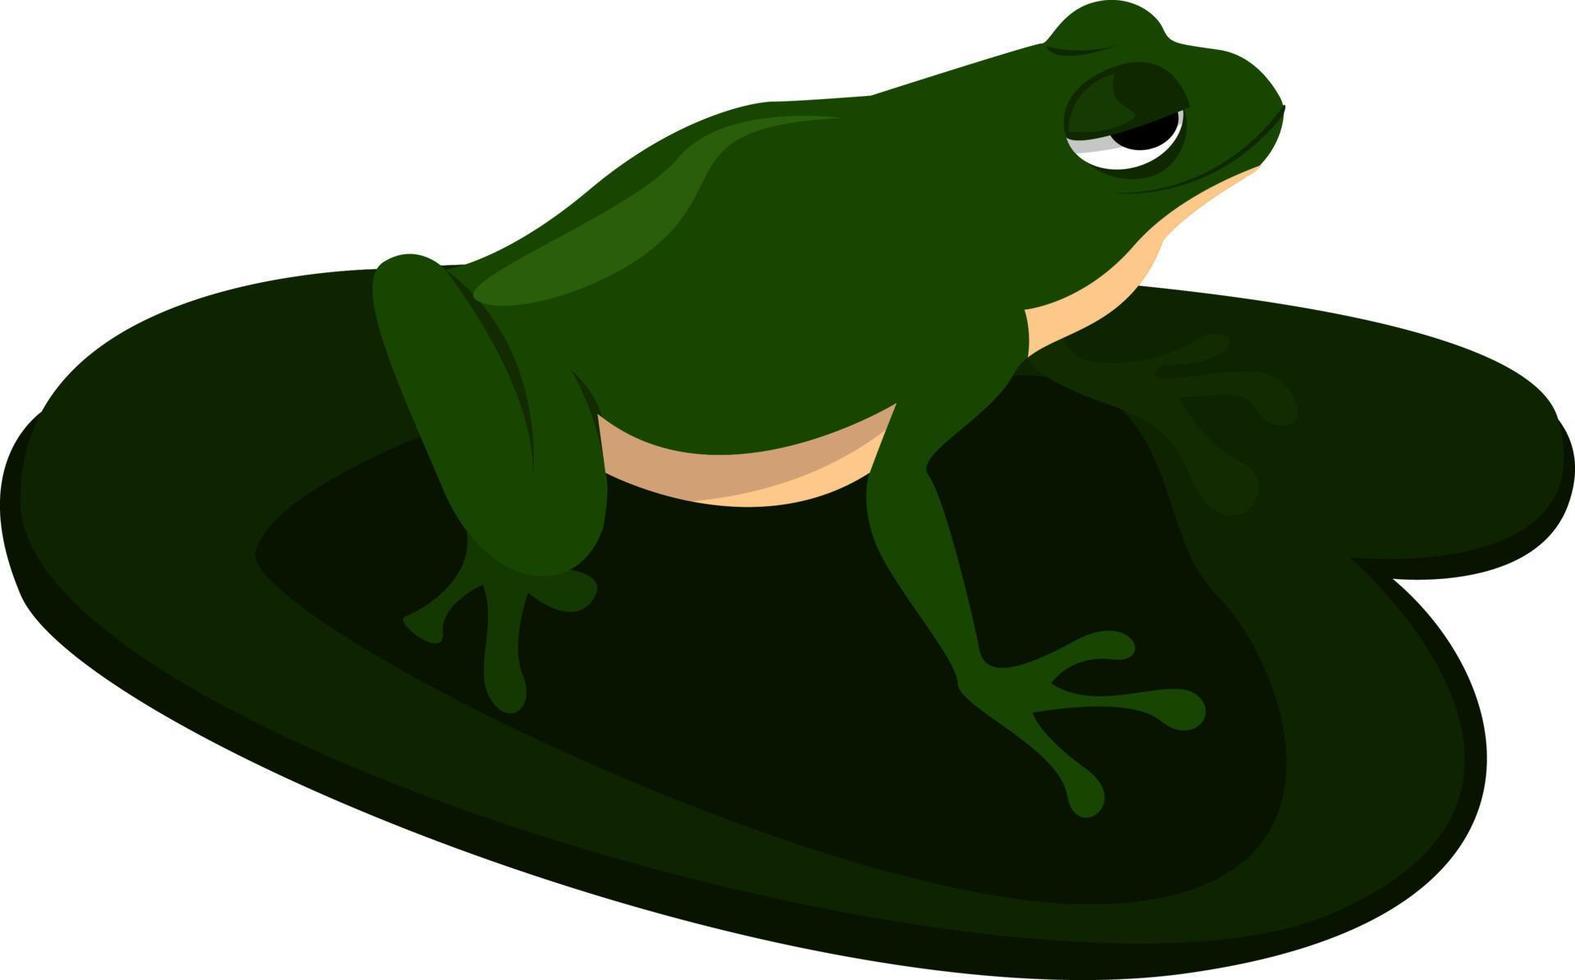 Green frog on lotus, illustration, vector on white background